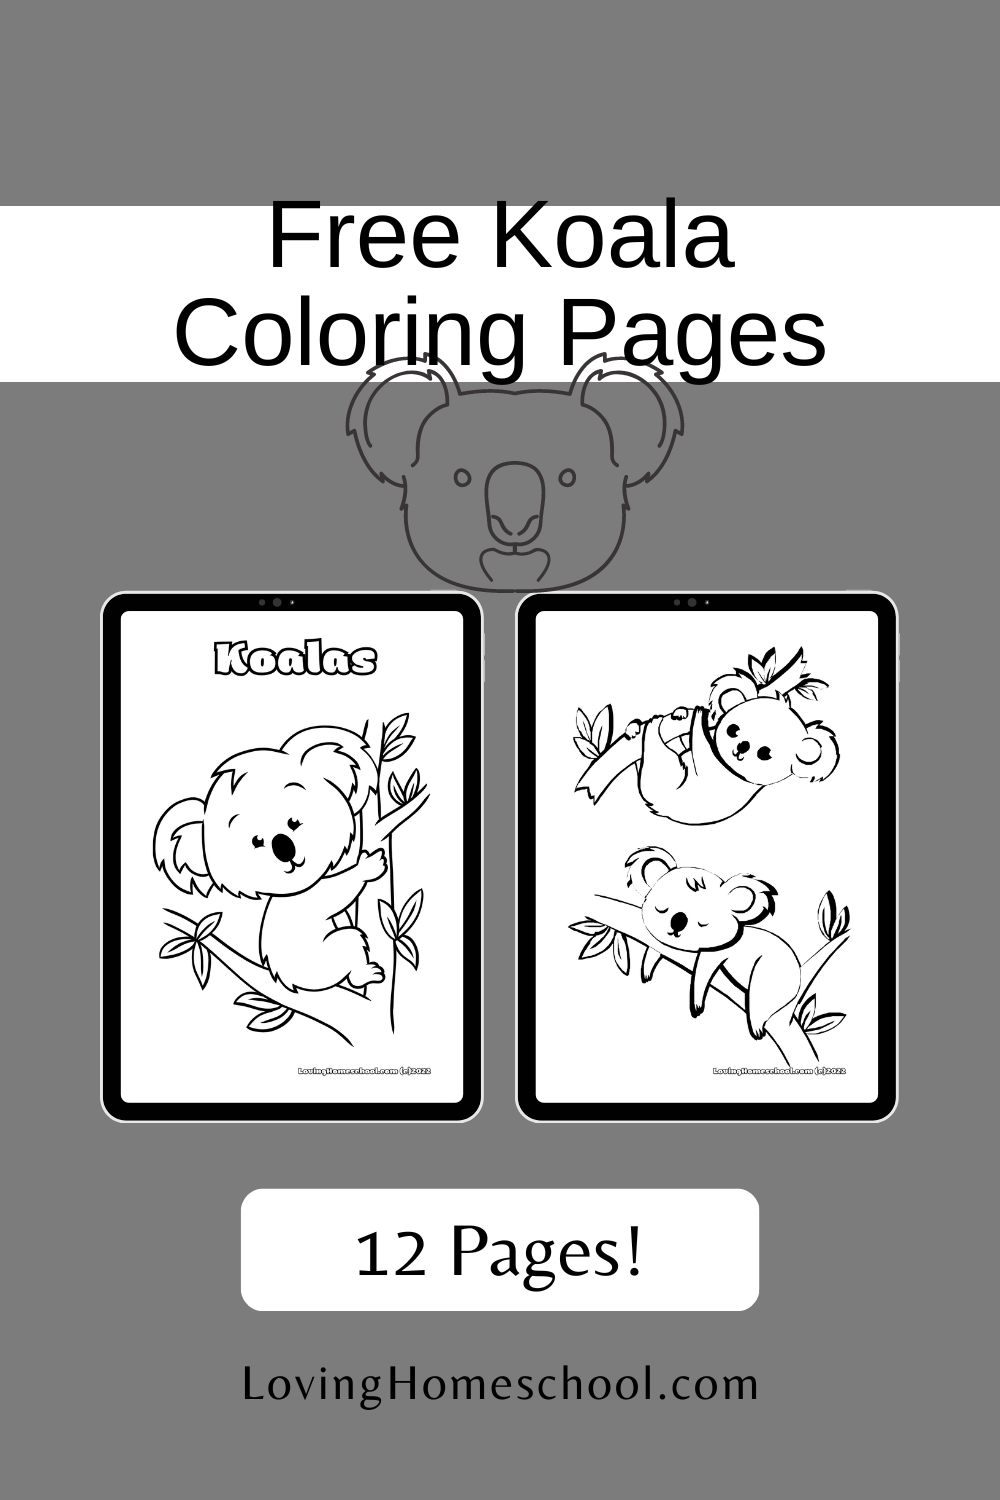 Koala Coloring Pages Pinterest Pin